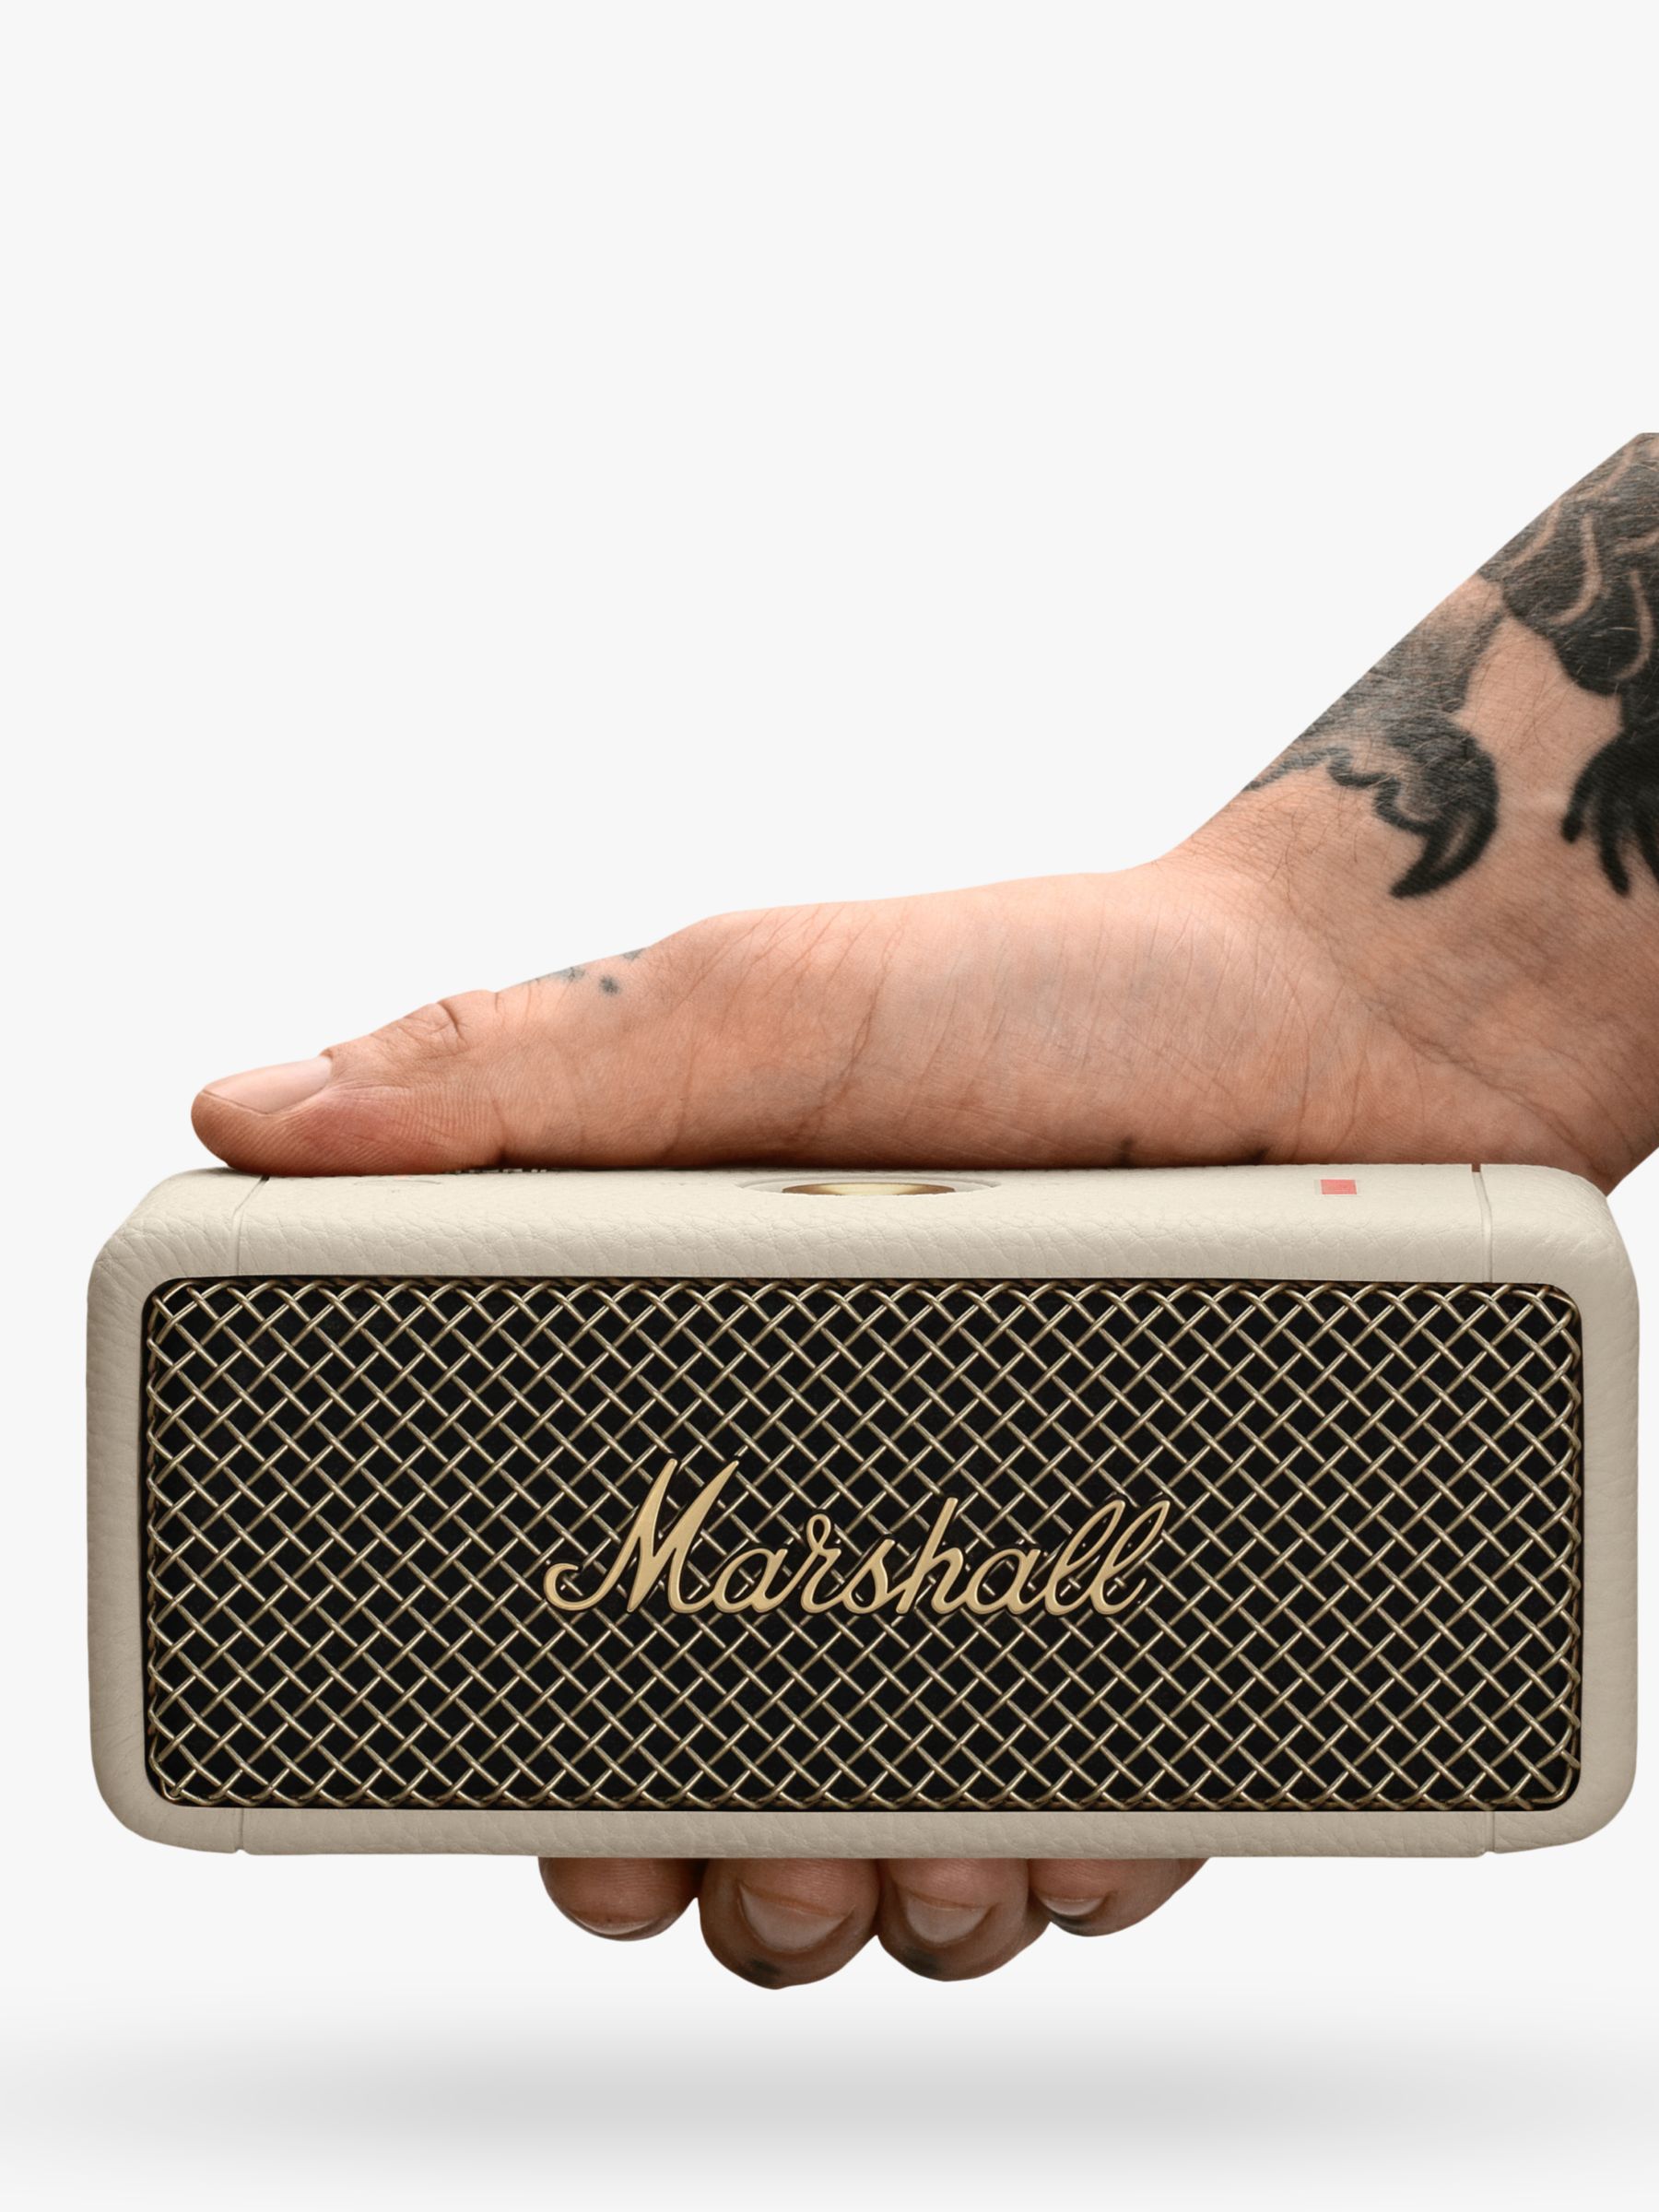 Marshall Emberton Bluetooth Portable Speaker - Cream 